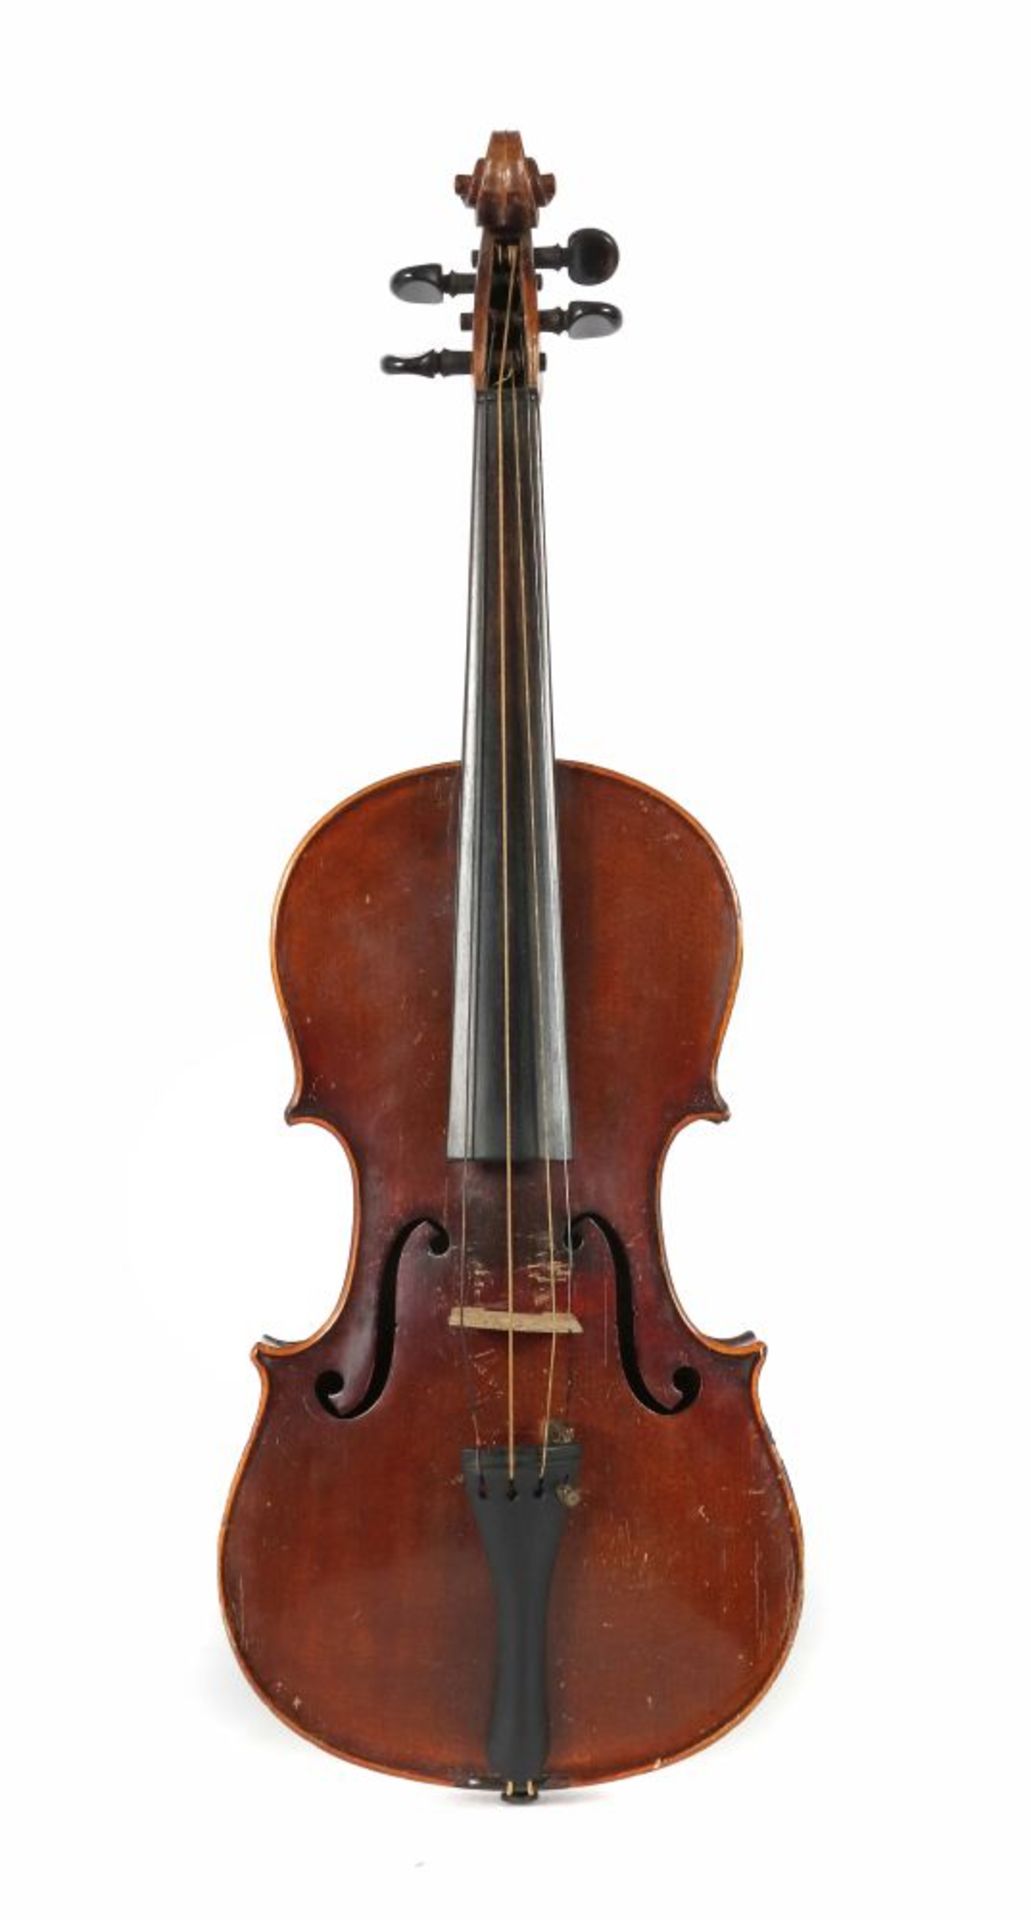 Geige mit Bogen um 1910-20, dunkler